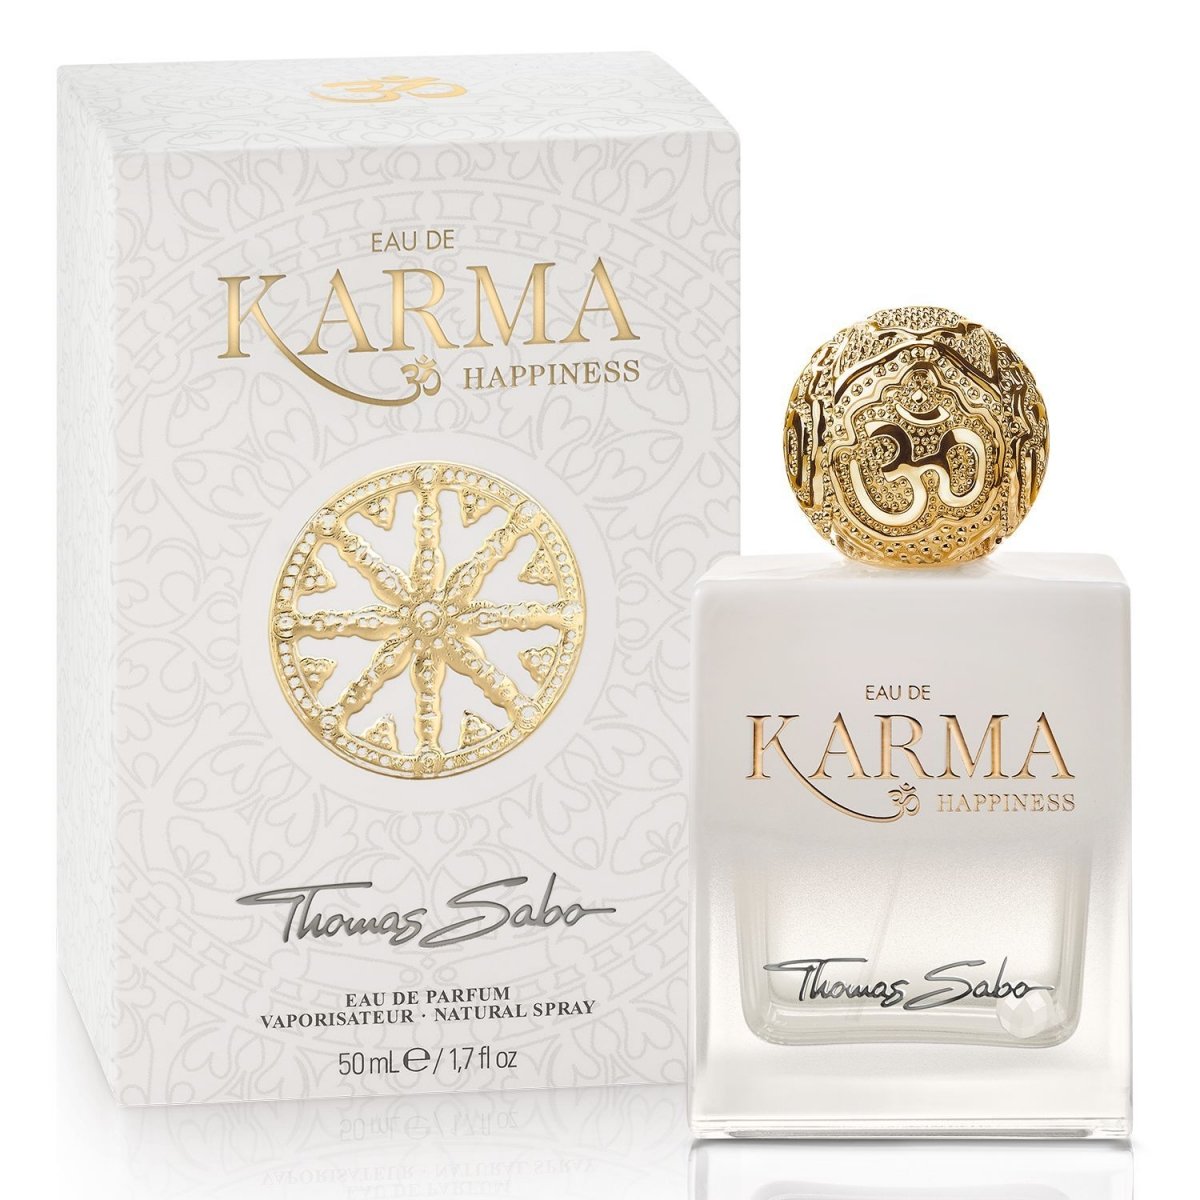 Eau de Karma Happiness by Thomas Sabo » Reviews & Perfume Facts